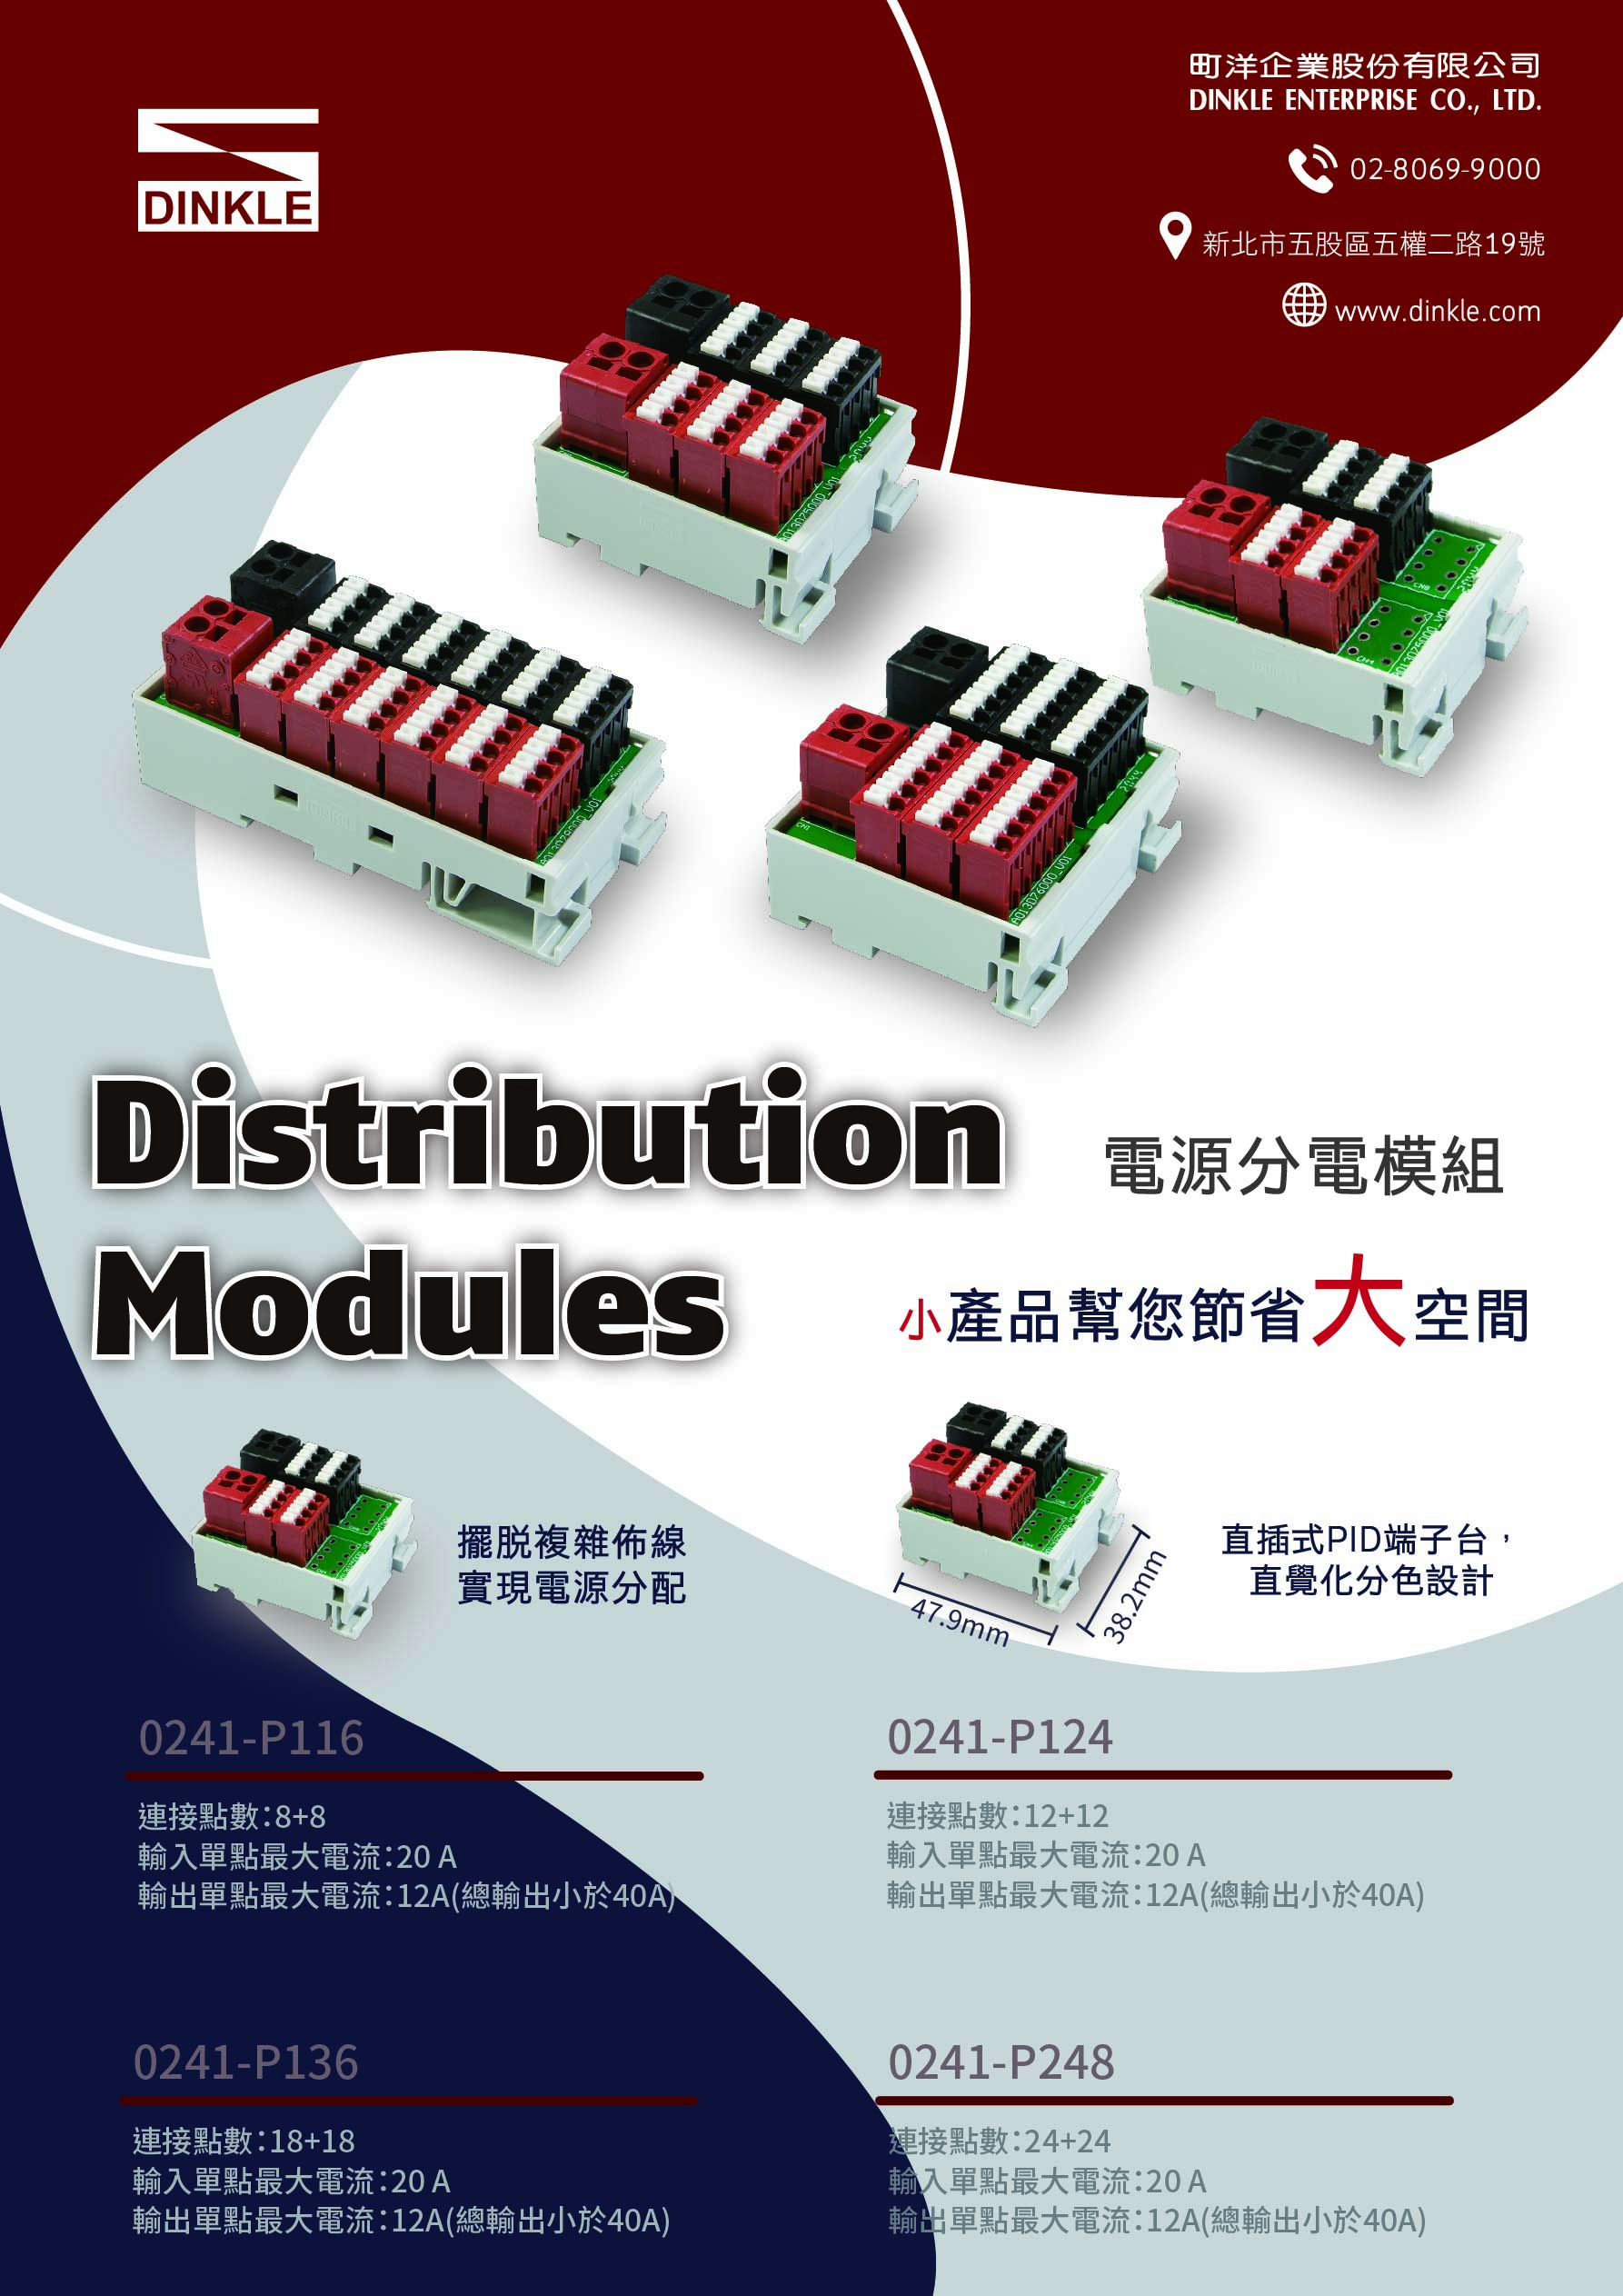 Distribution Modules